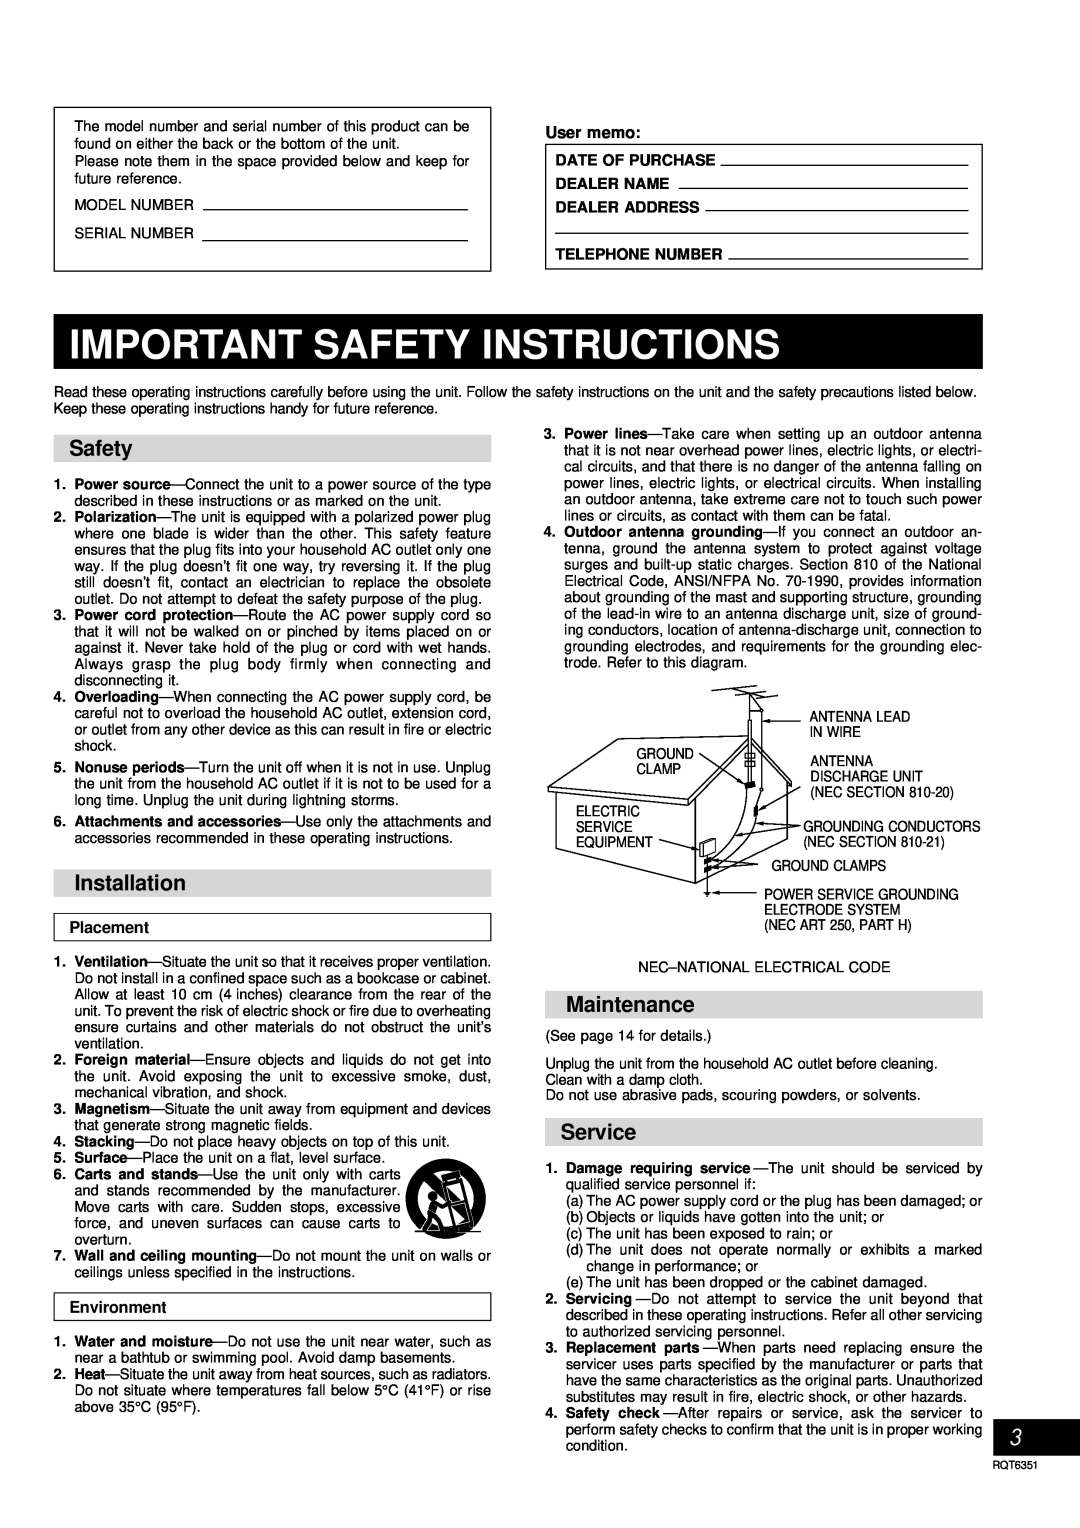 Panasonic SC-AK100 operating instructions Installation, Maintenance, Service, Important Safety Instructions 